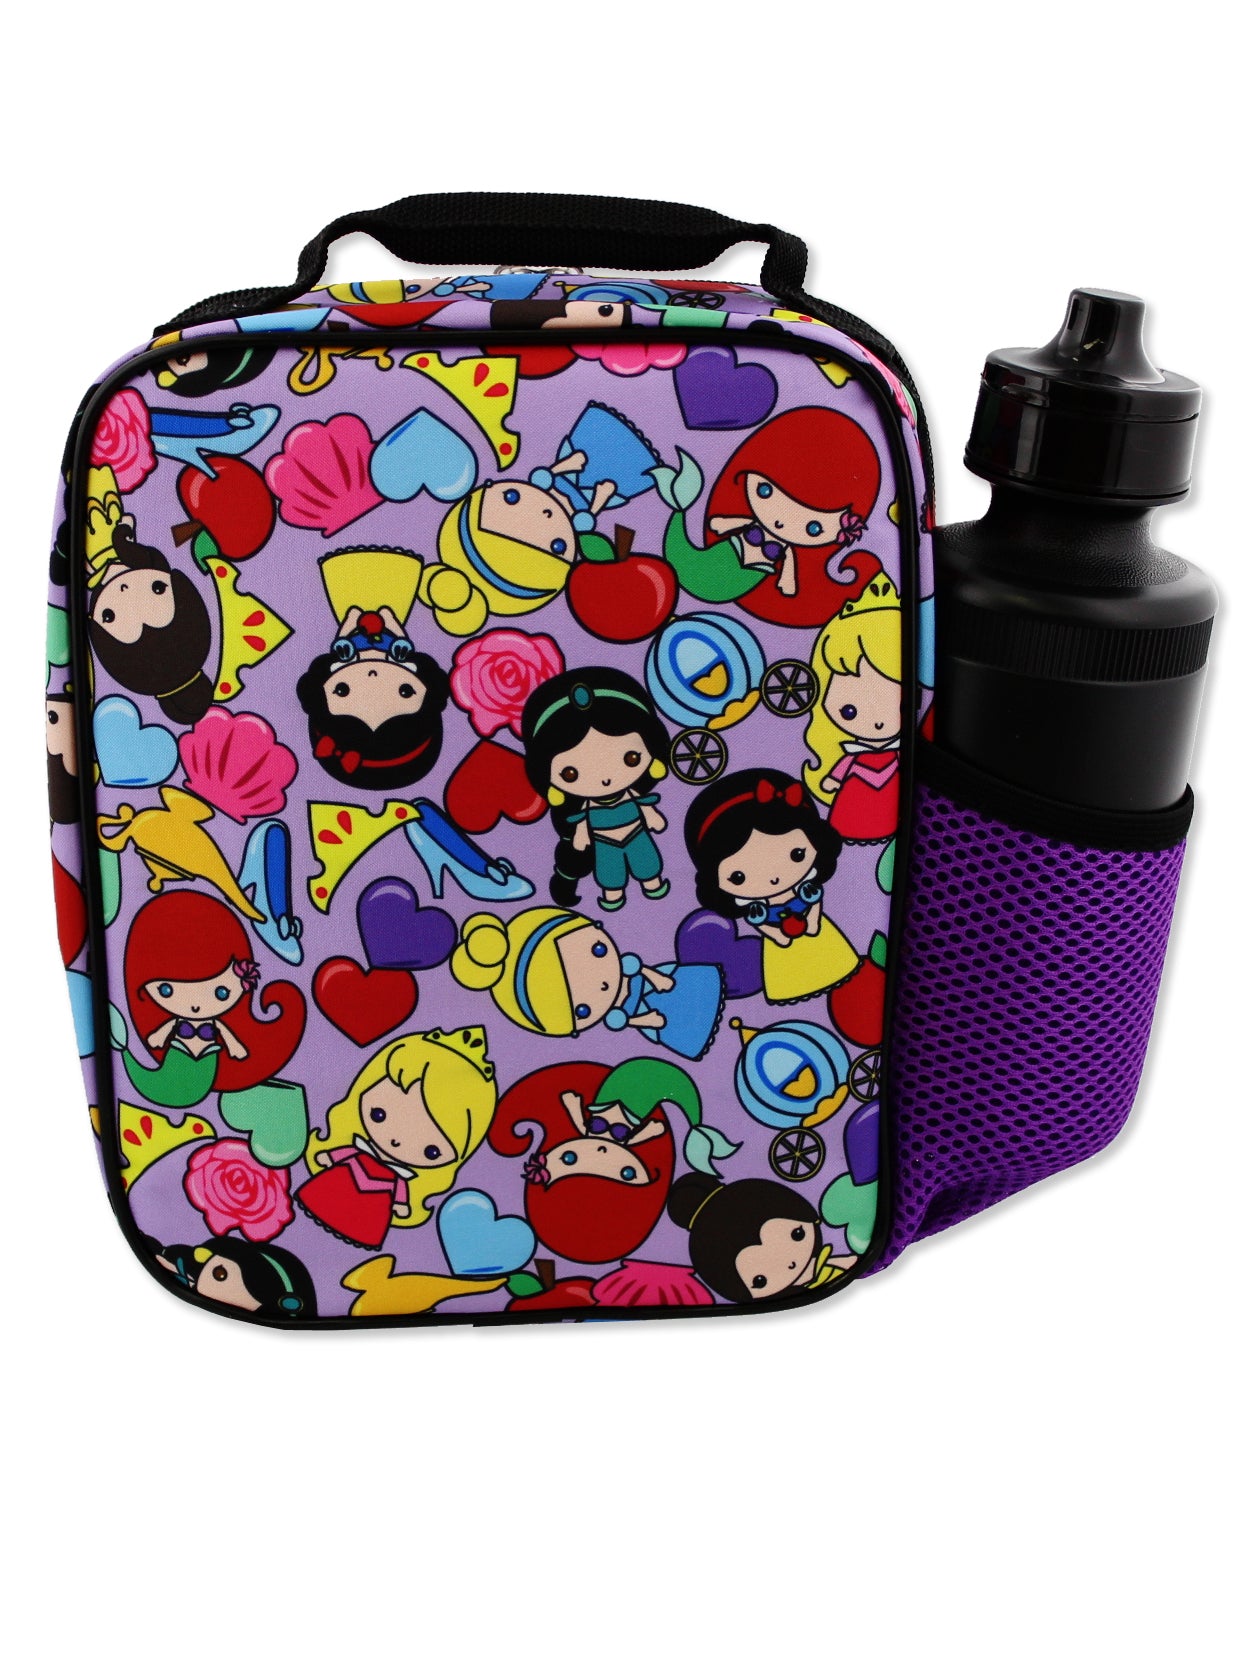 Disney Princess Emoji Girl's Soft Insulated School Lunch Box B19pn43023, Purple